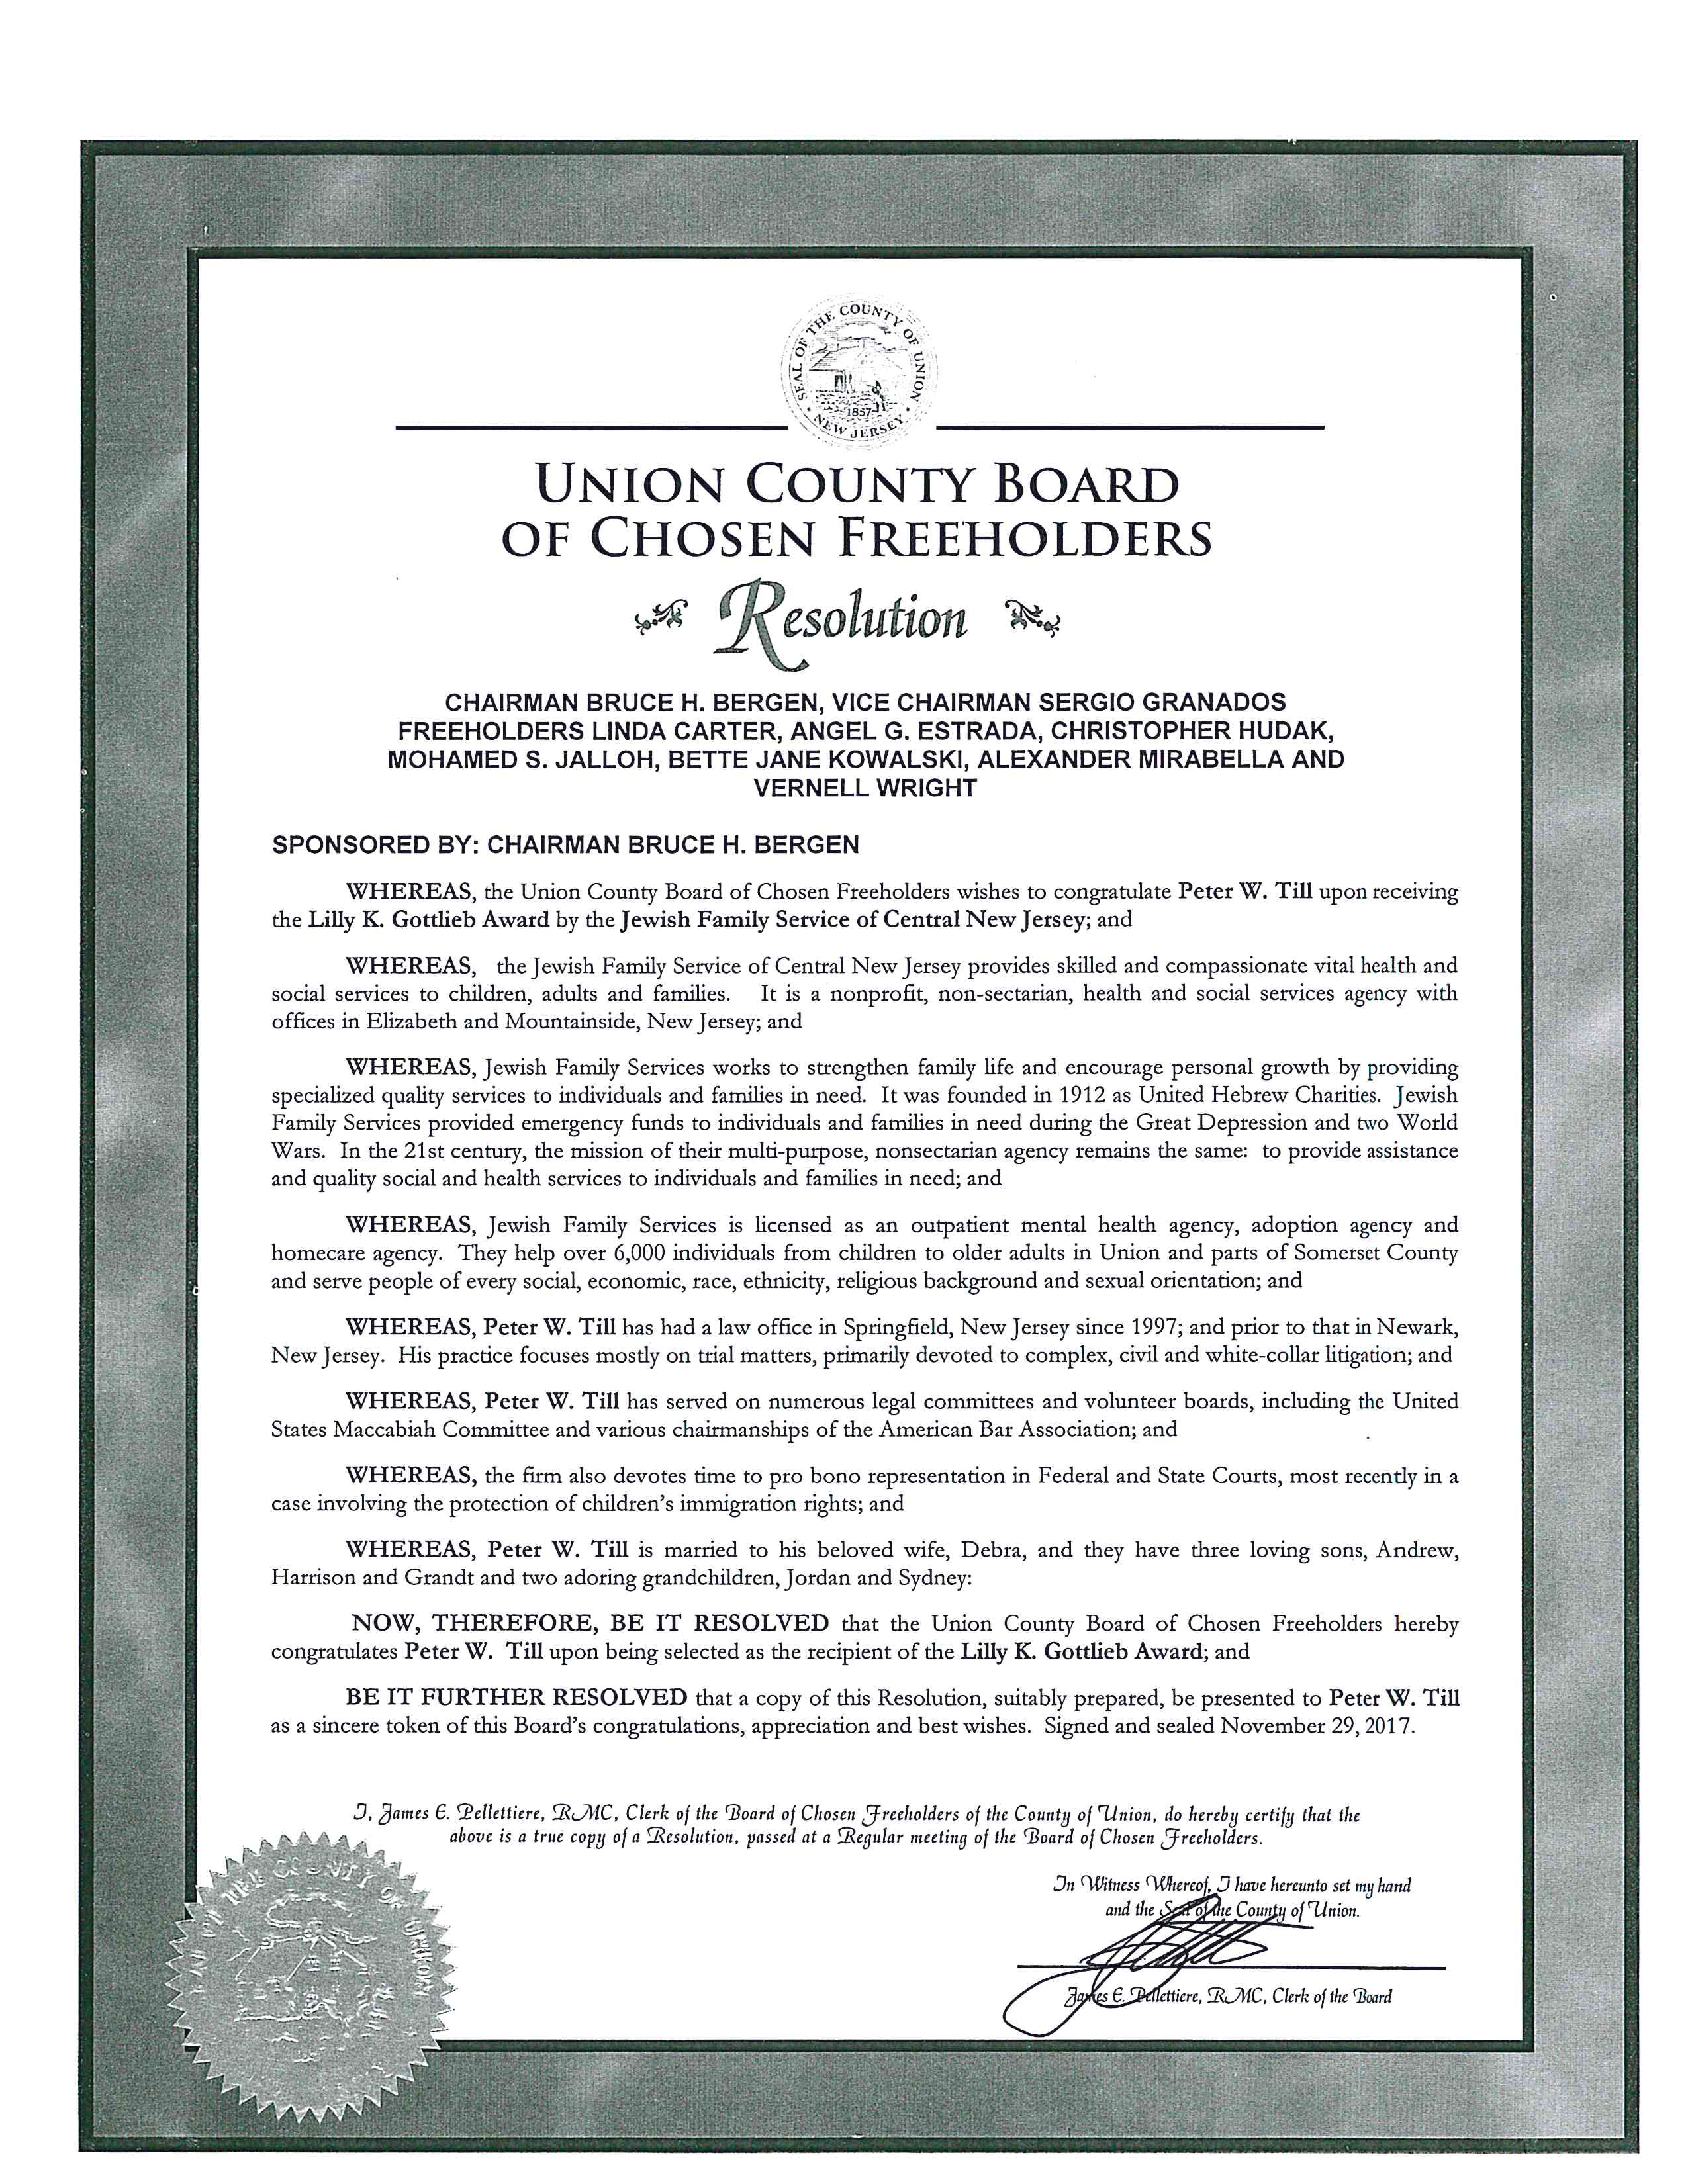 Union County Board of Chosen Freeholders Resolution